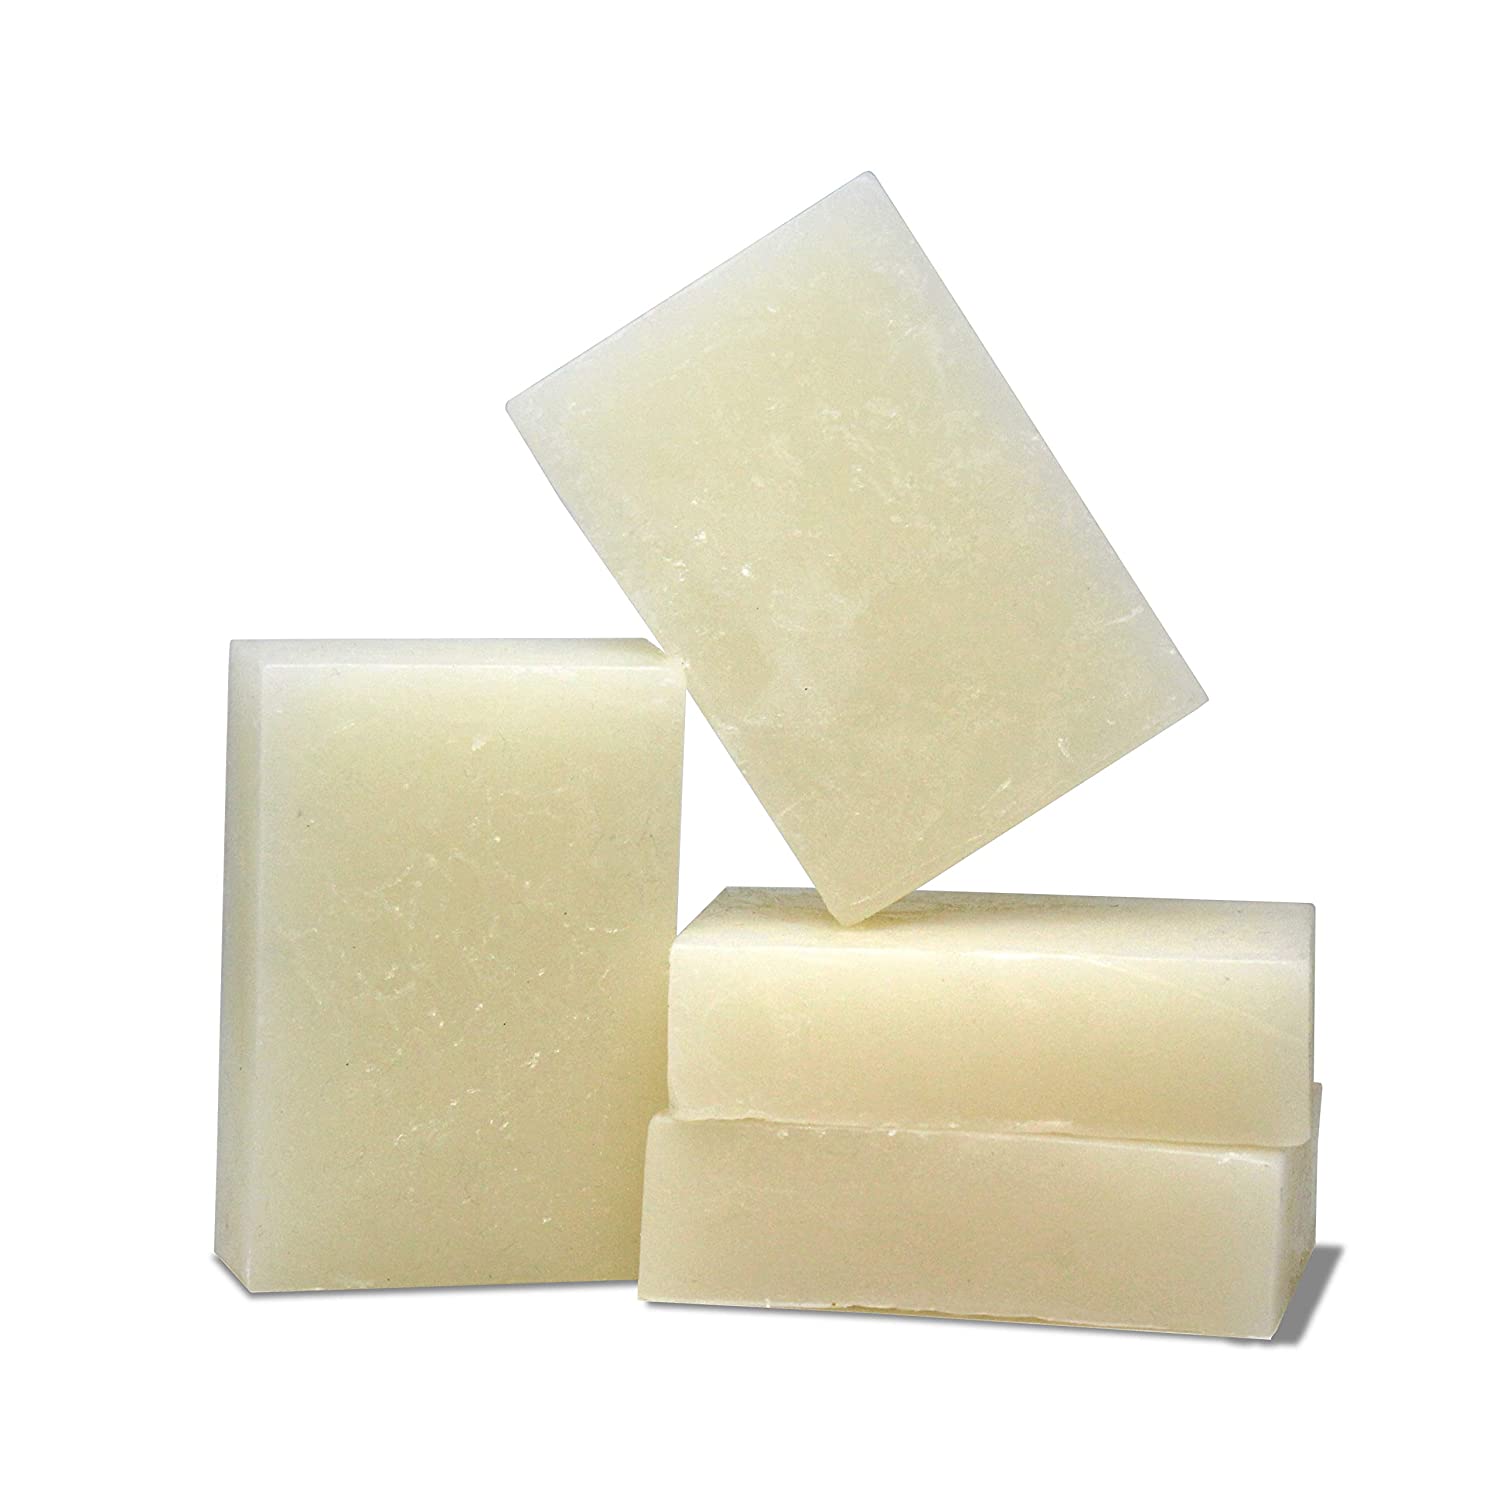 Ultra Clear Transparent Soap - Lather Demo #soapbase #transparentsoap  #soapncrafts 